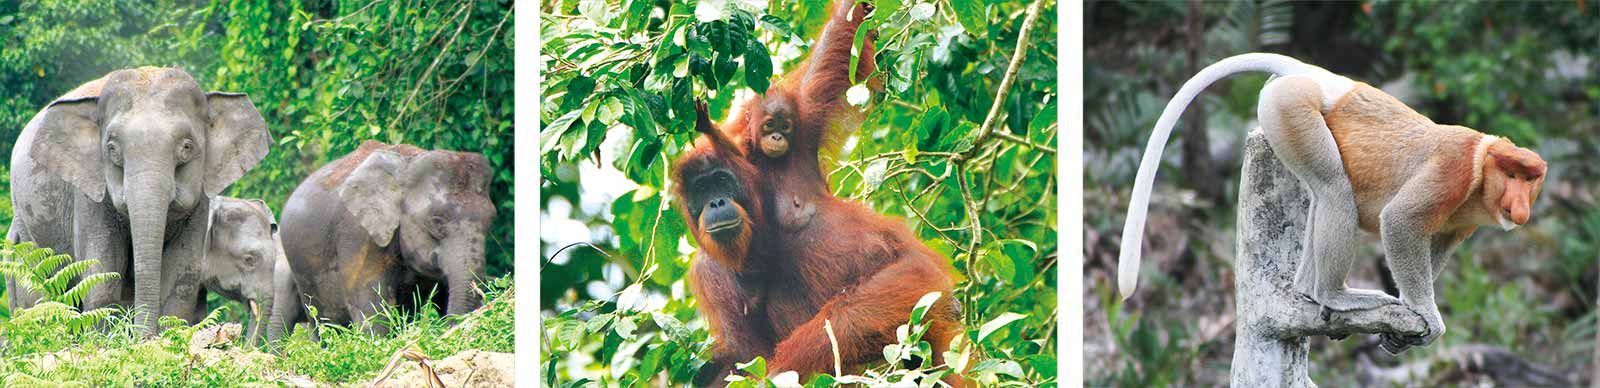 Some examples of the wildlife in Borneo